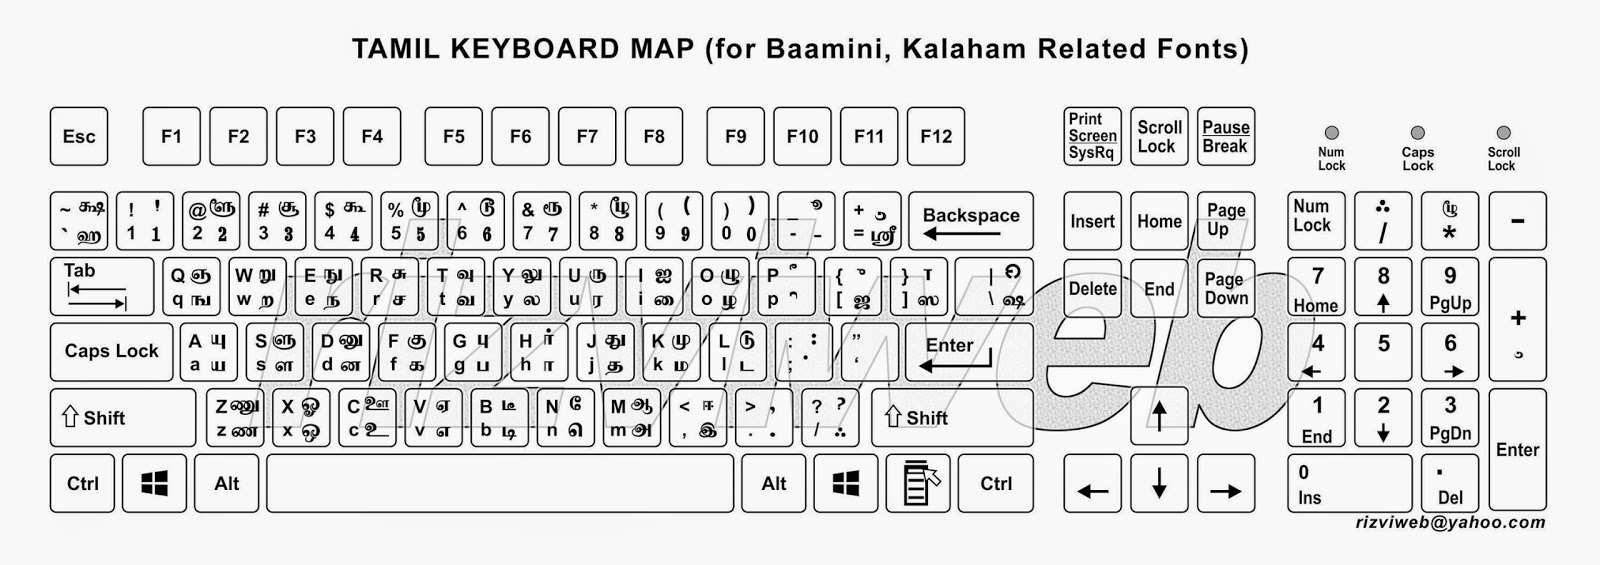 Azhagi Tamil Font Keyboard